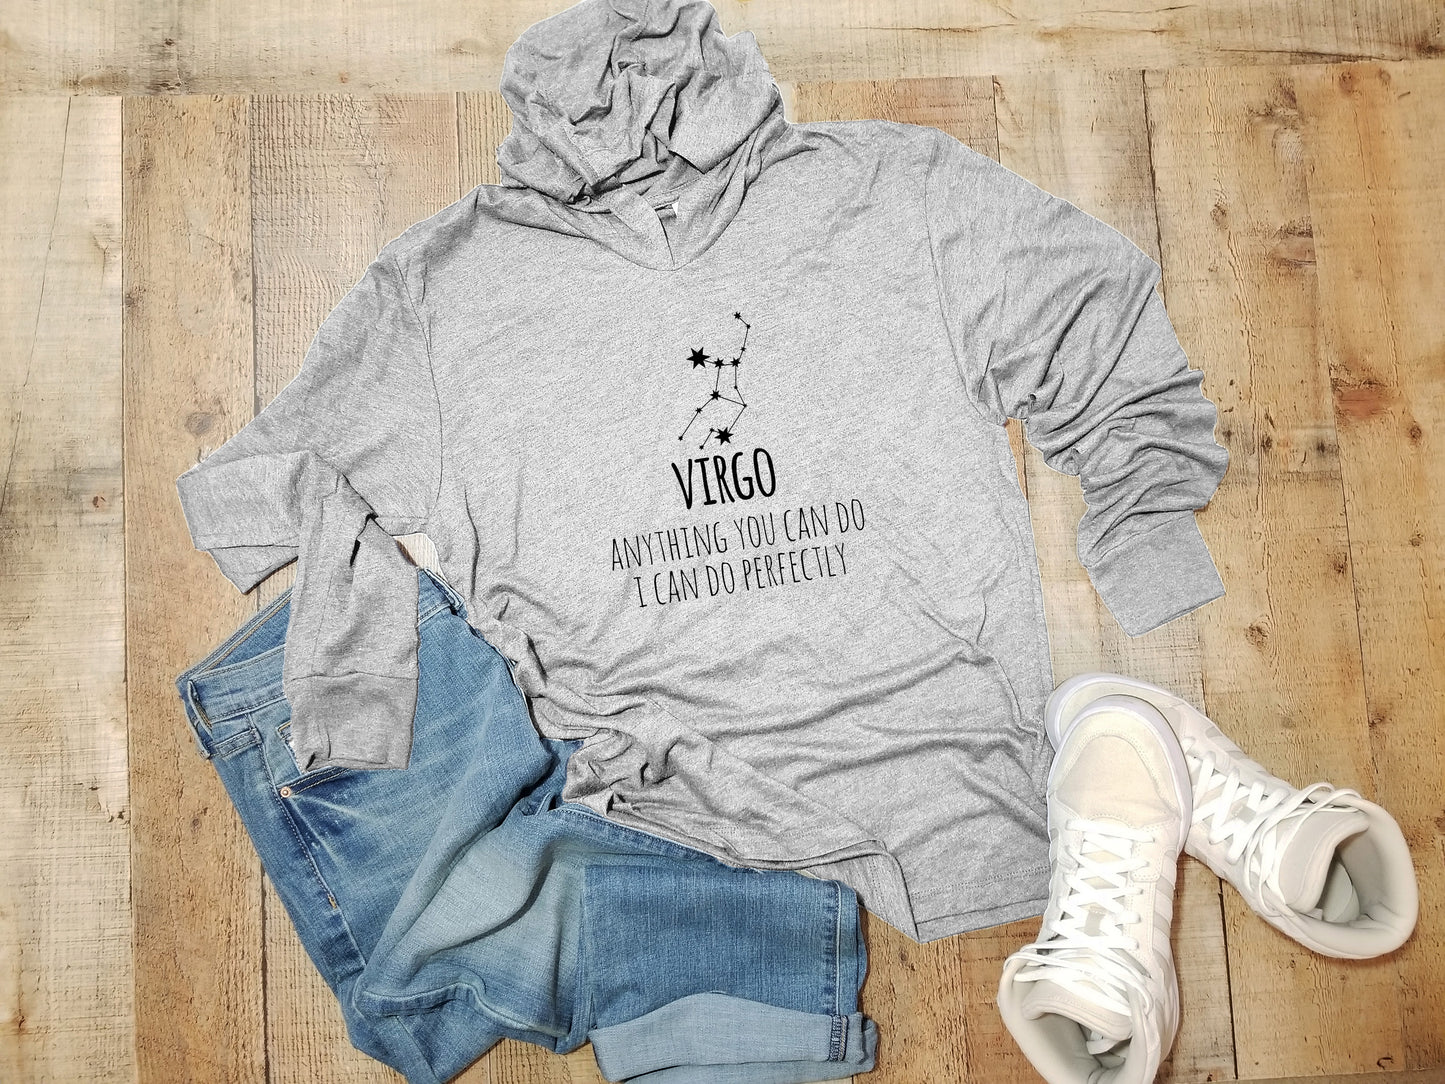 Virgo - Unisex T-Shirt Hoodie - Heather Gray